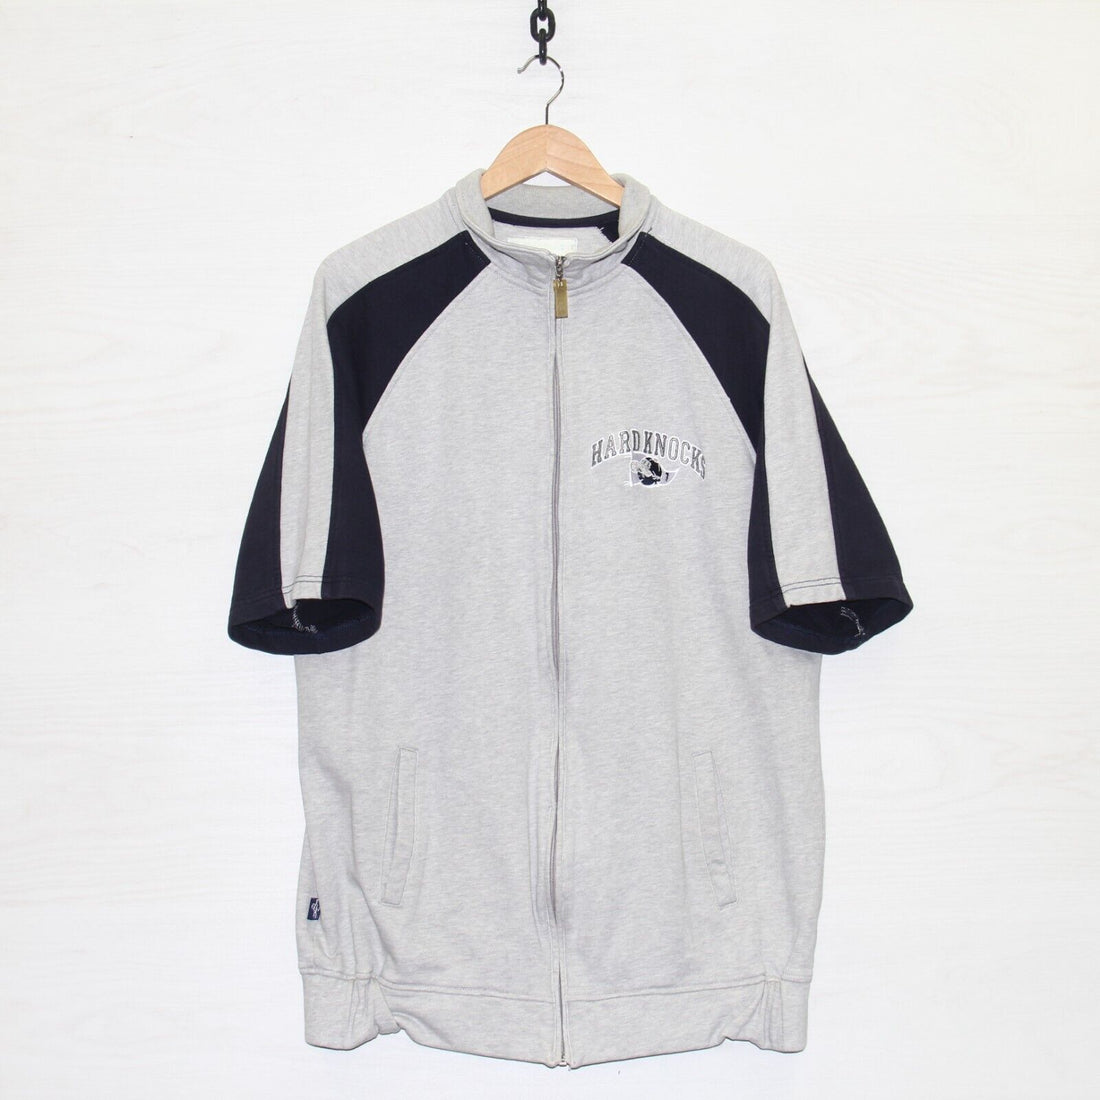 Vintage Hard Knocks Bolo Full Zip Tee Sweatshirt Size Medium Gray 90s